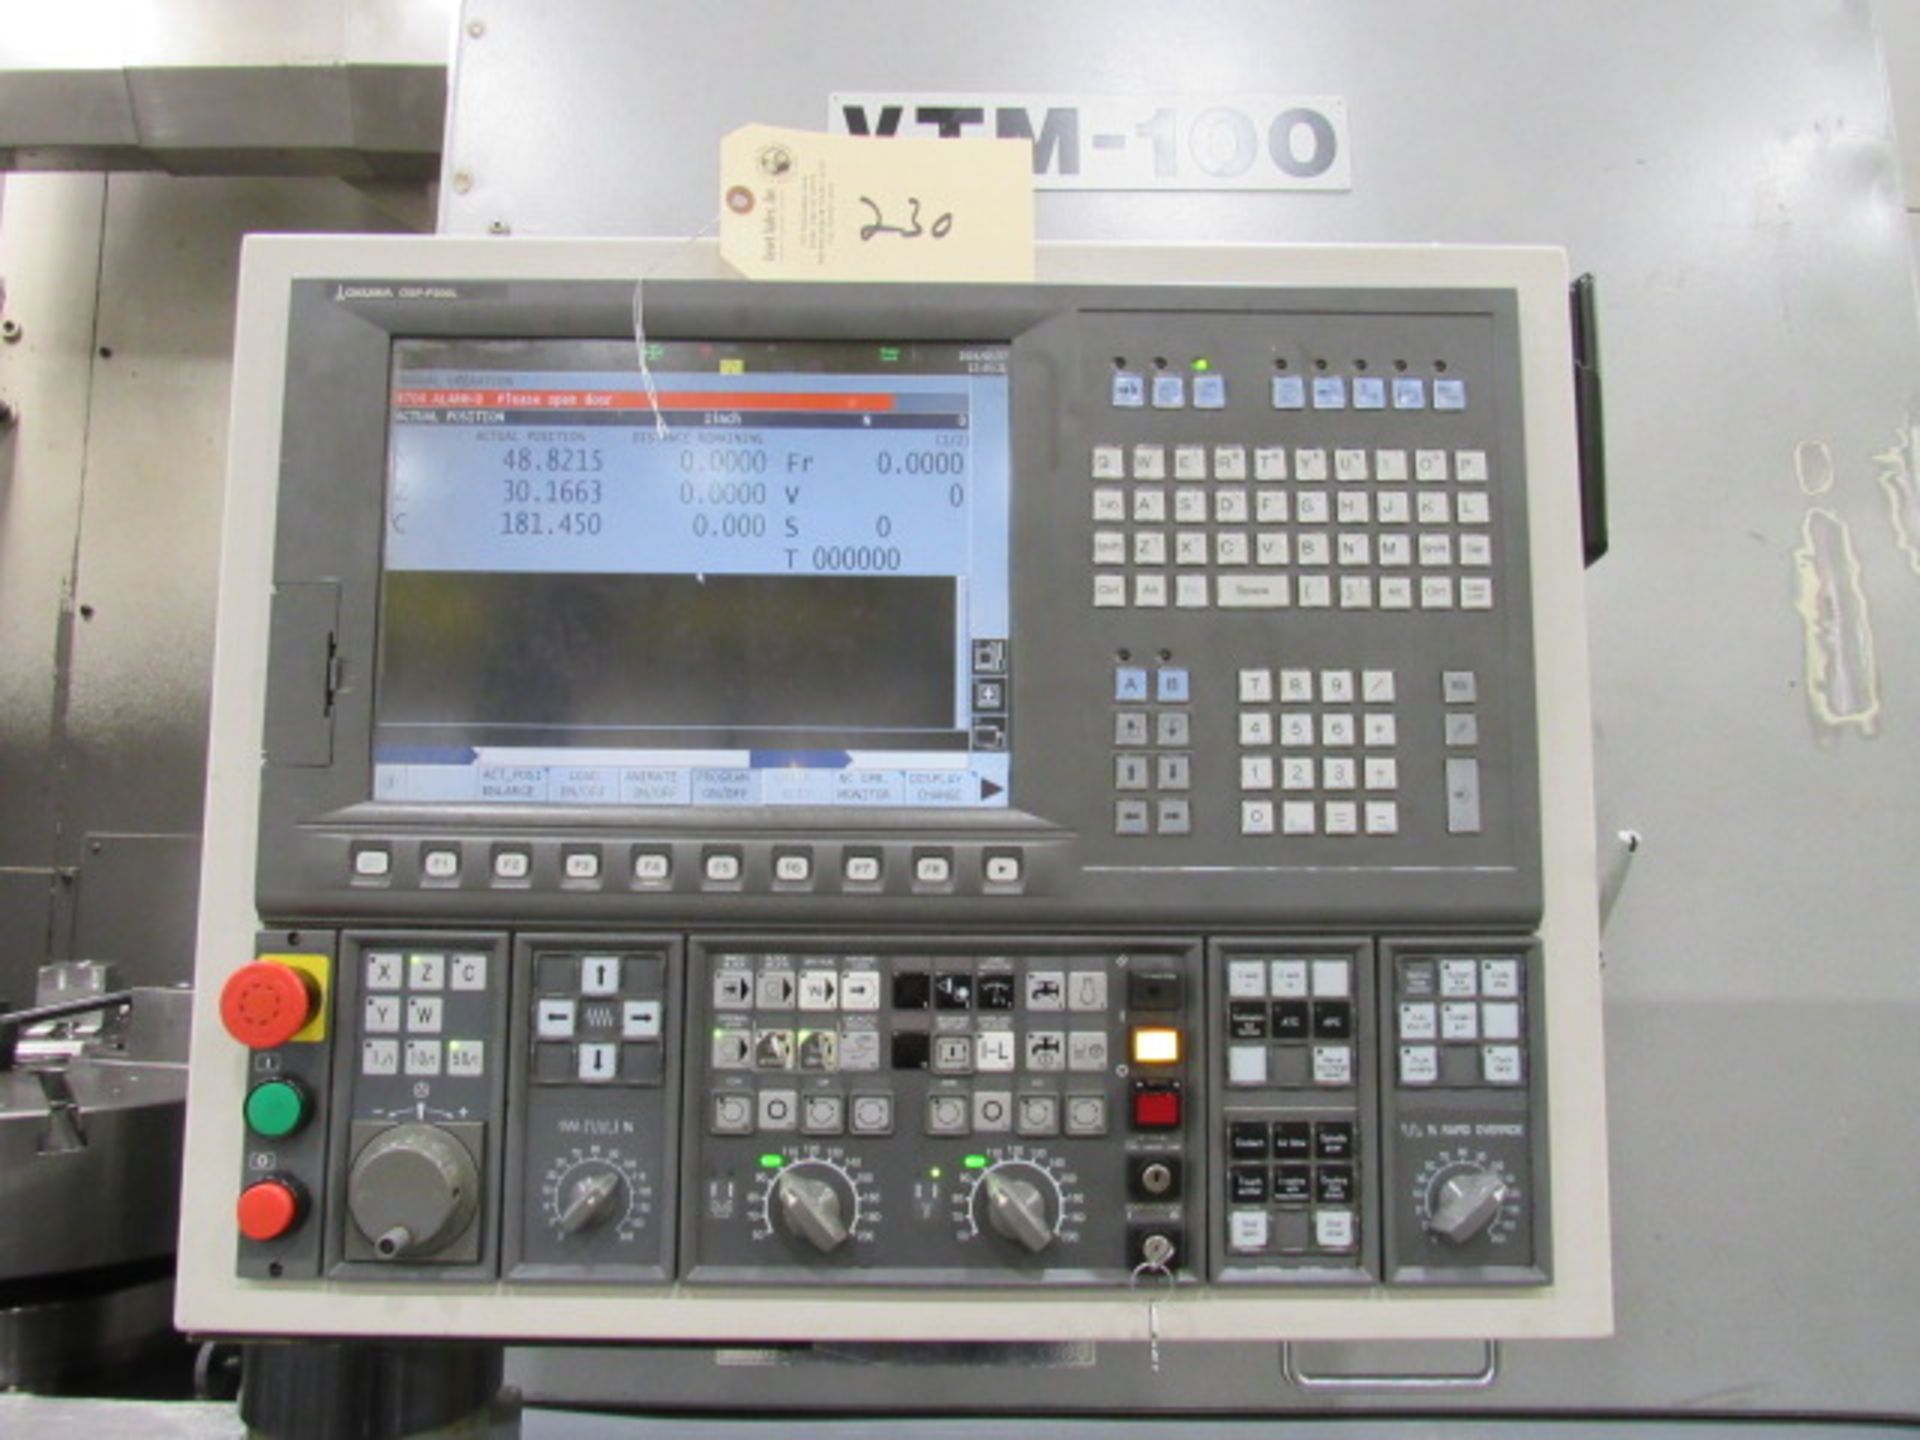 Okuma VTM-100 CNC Vertical Turning Center with Live Milling - Image 2 of 9